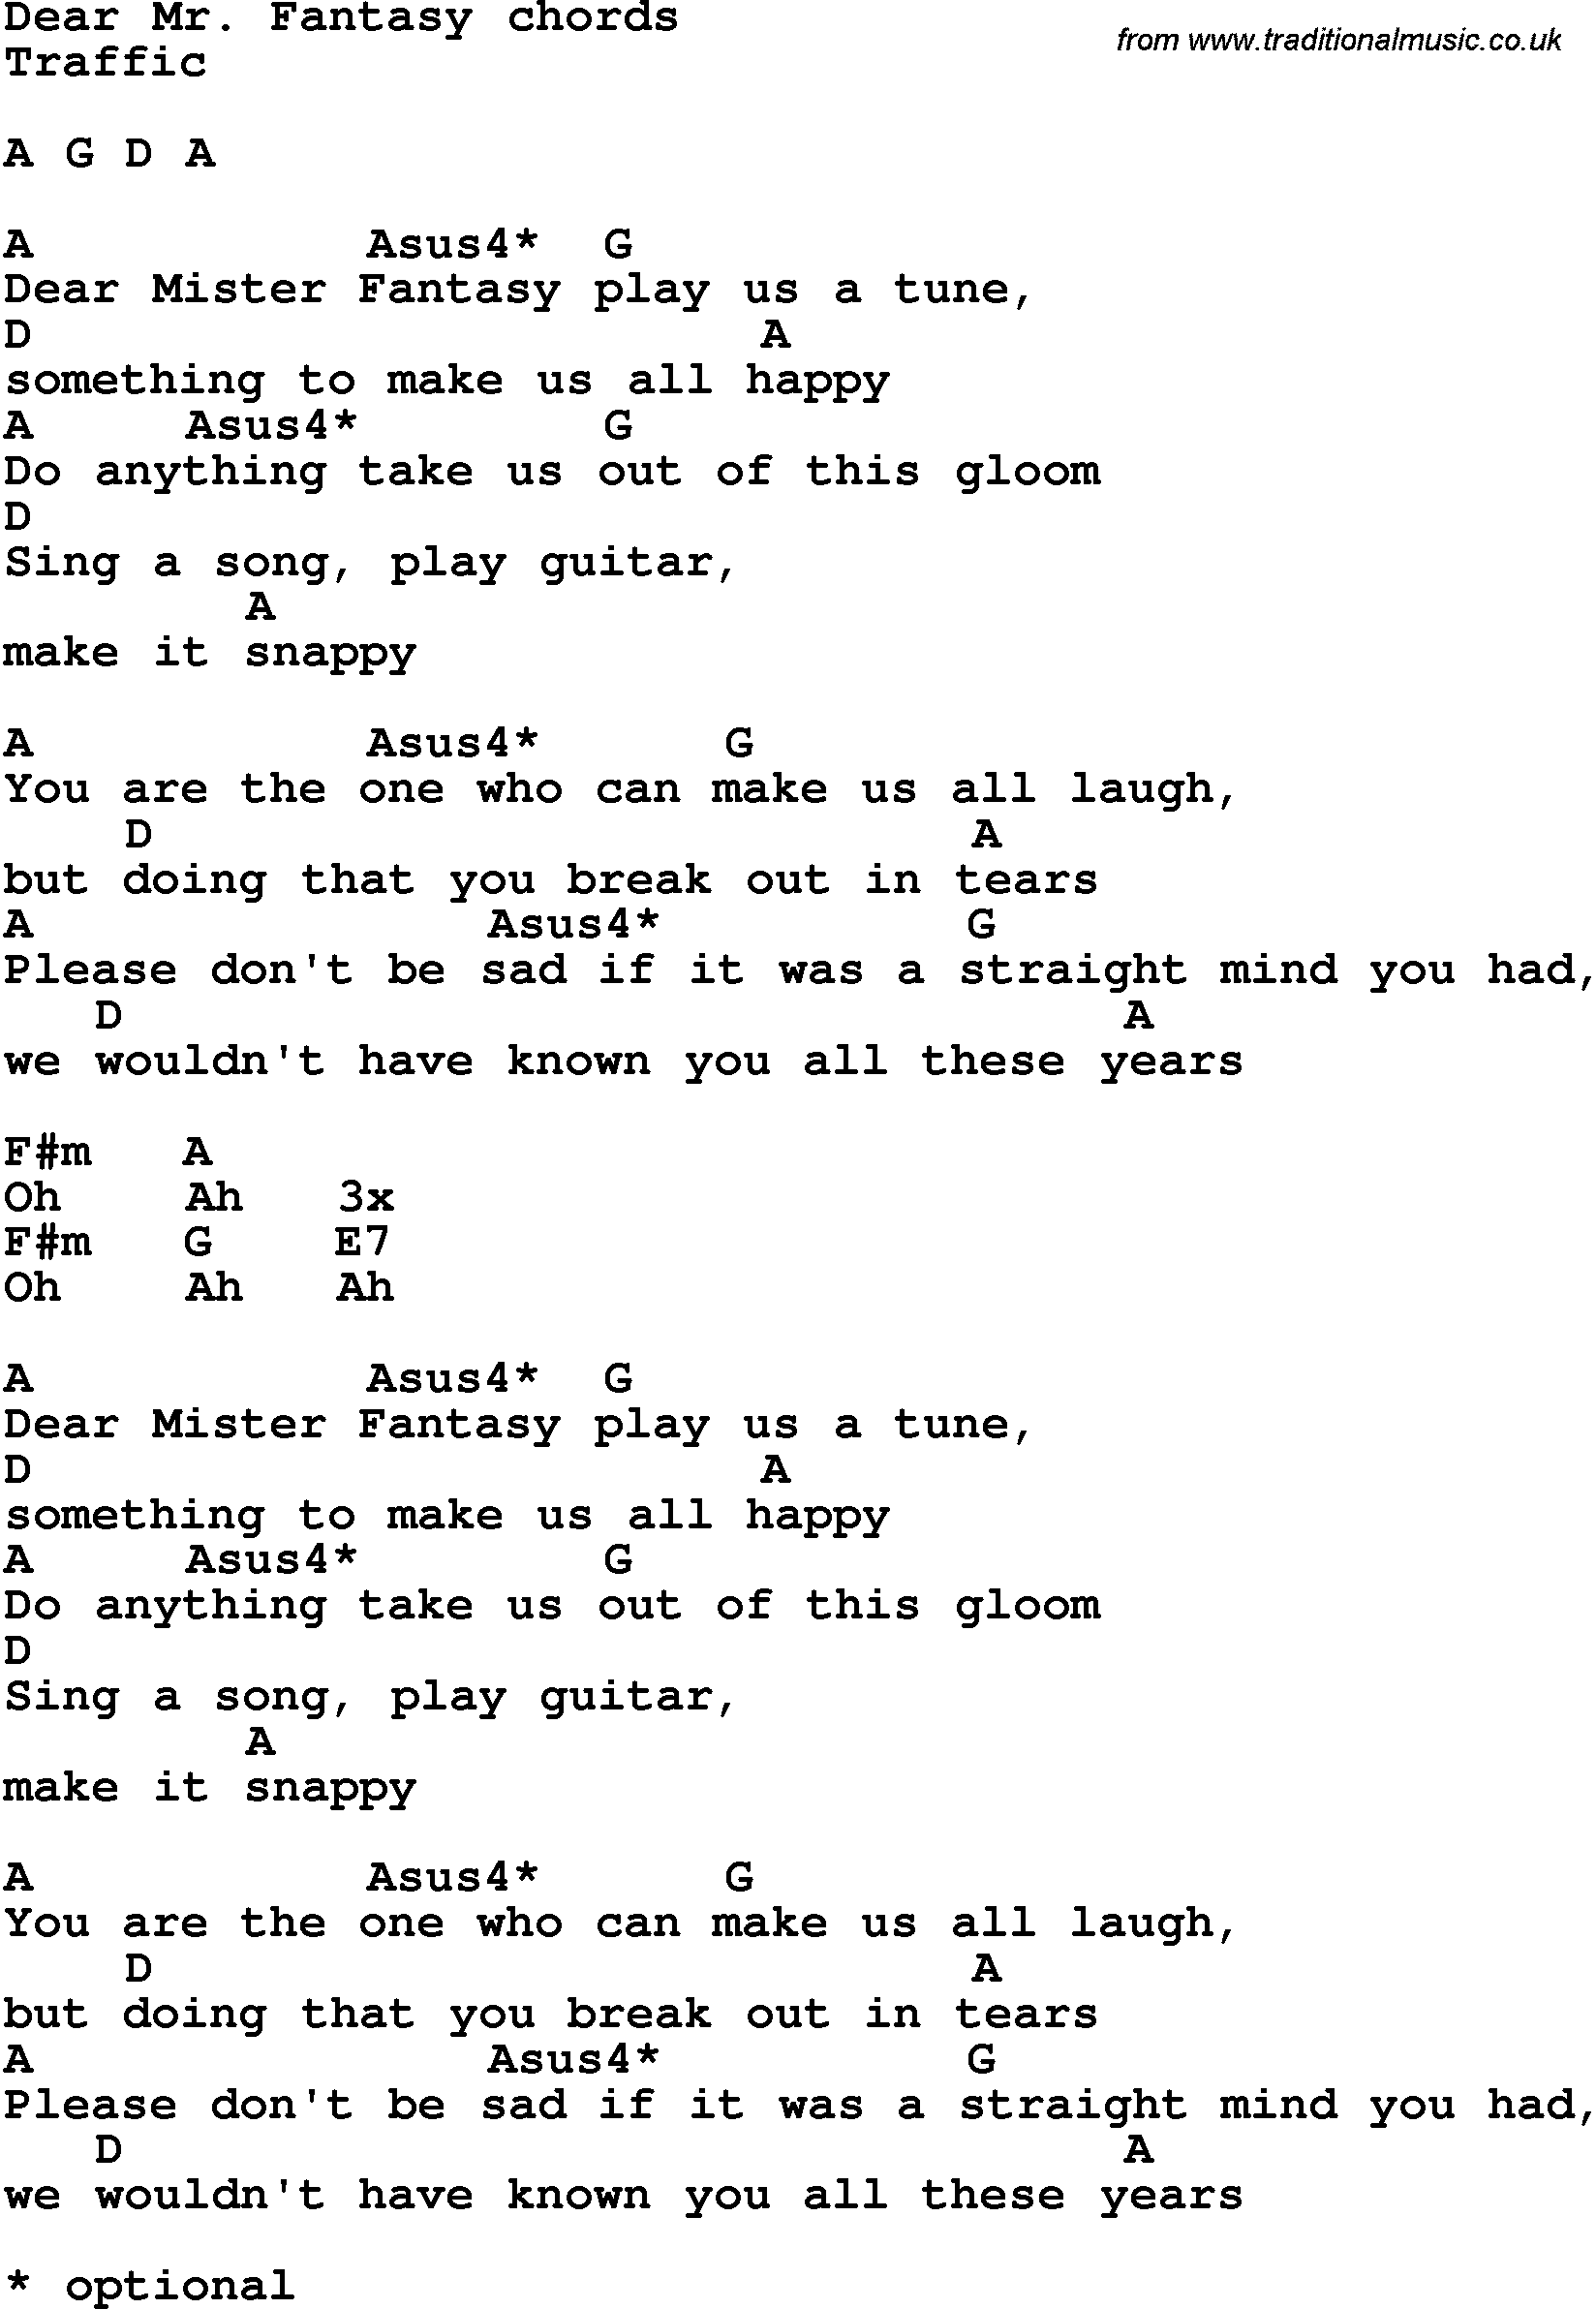 Song Lyrics with guitar chords for Dear Mr